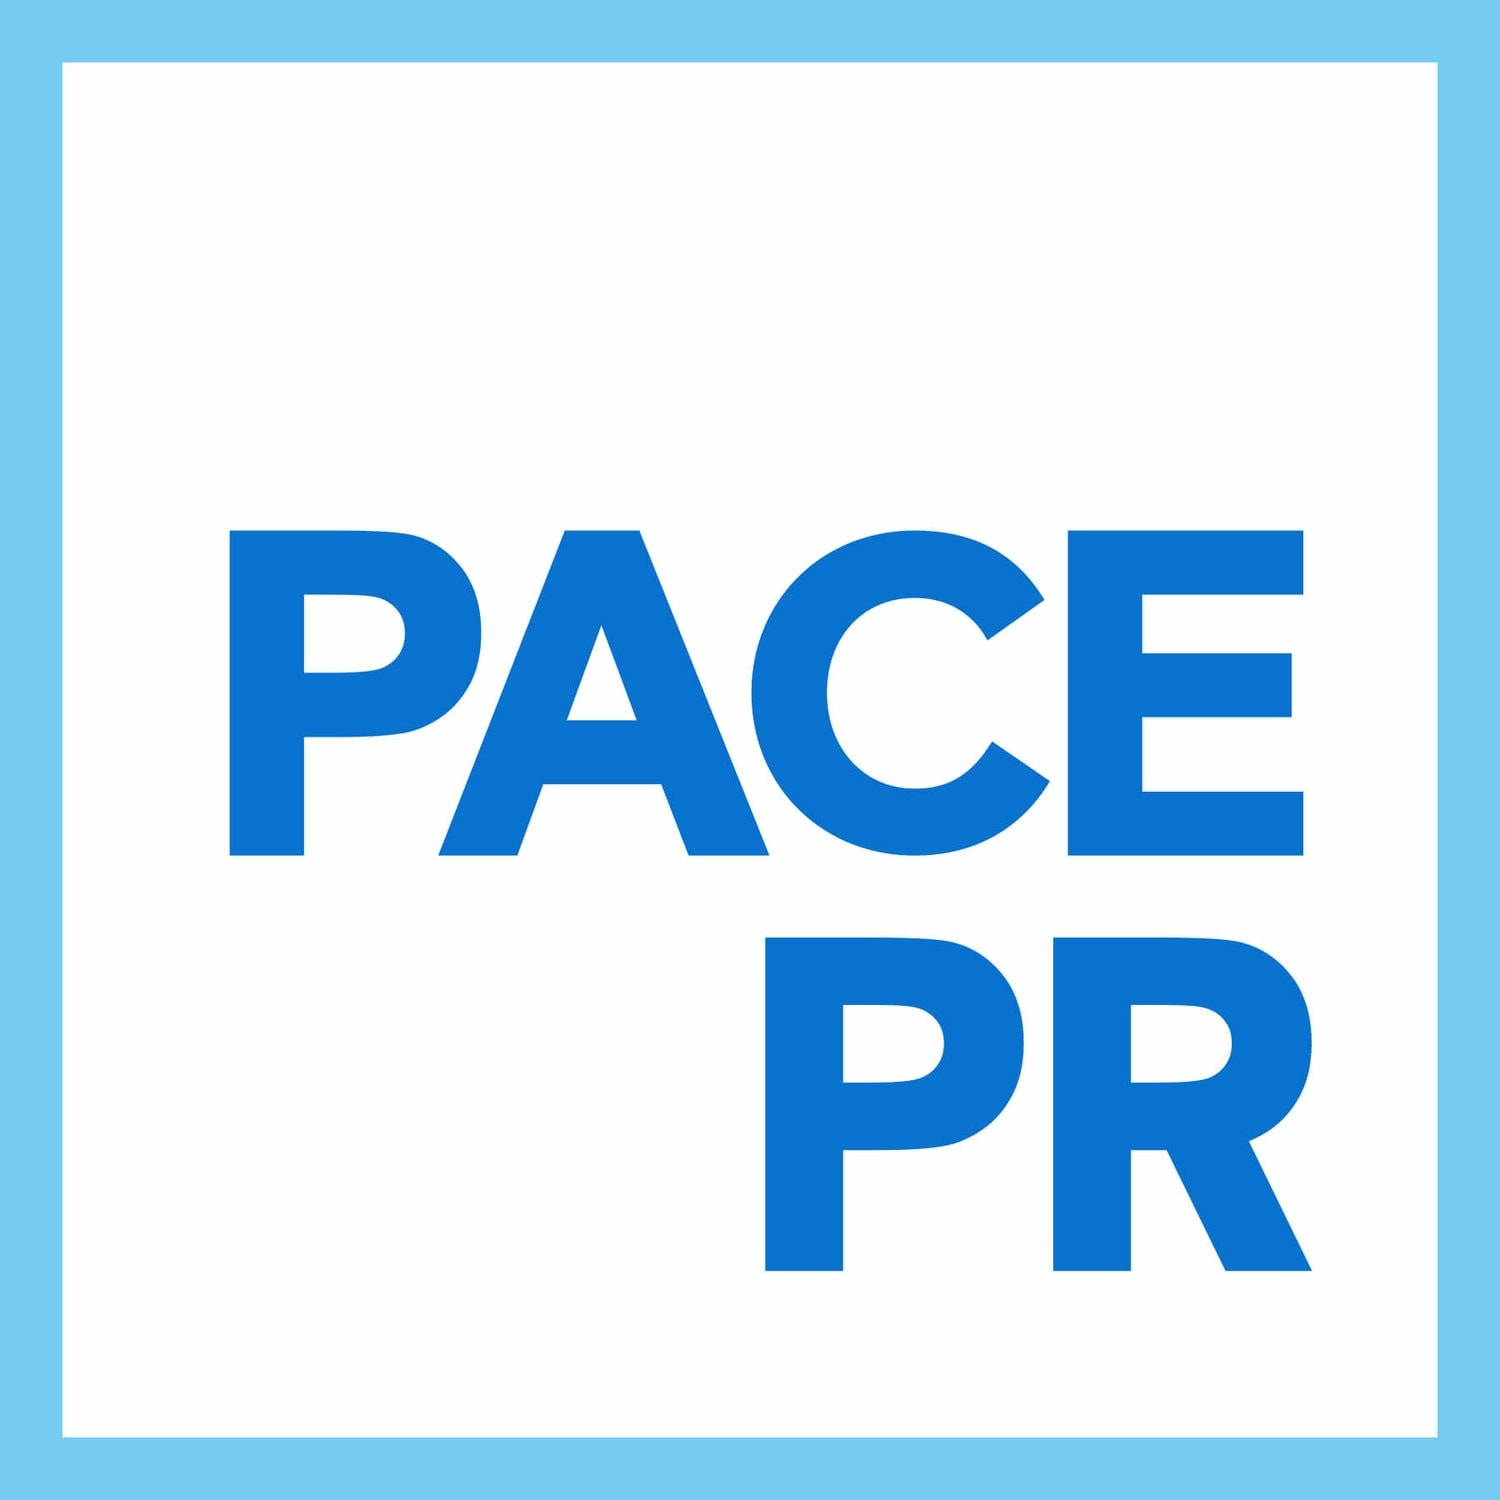 Pace Public Relations